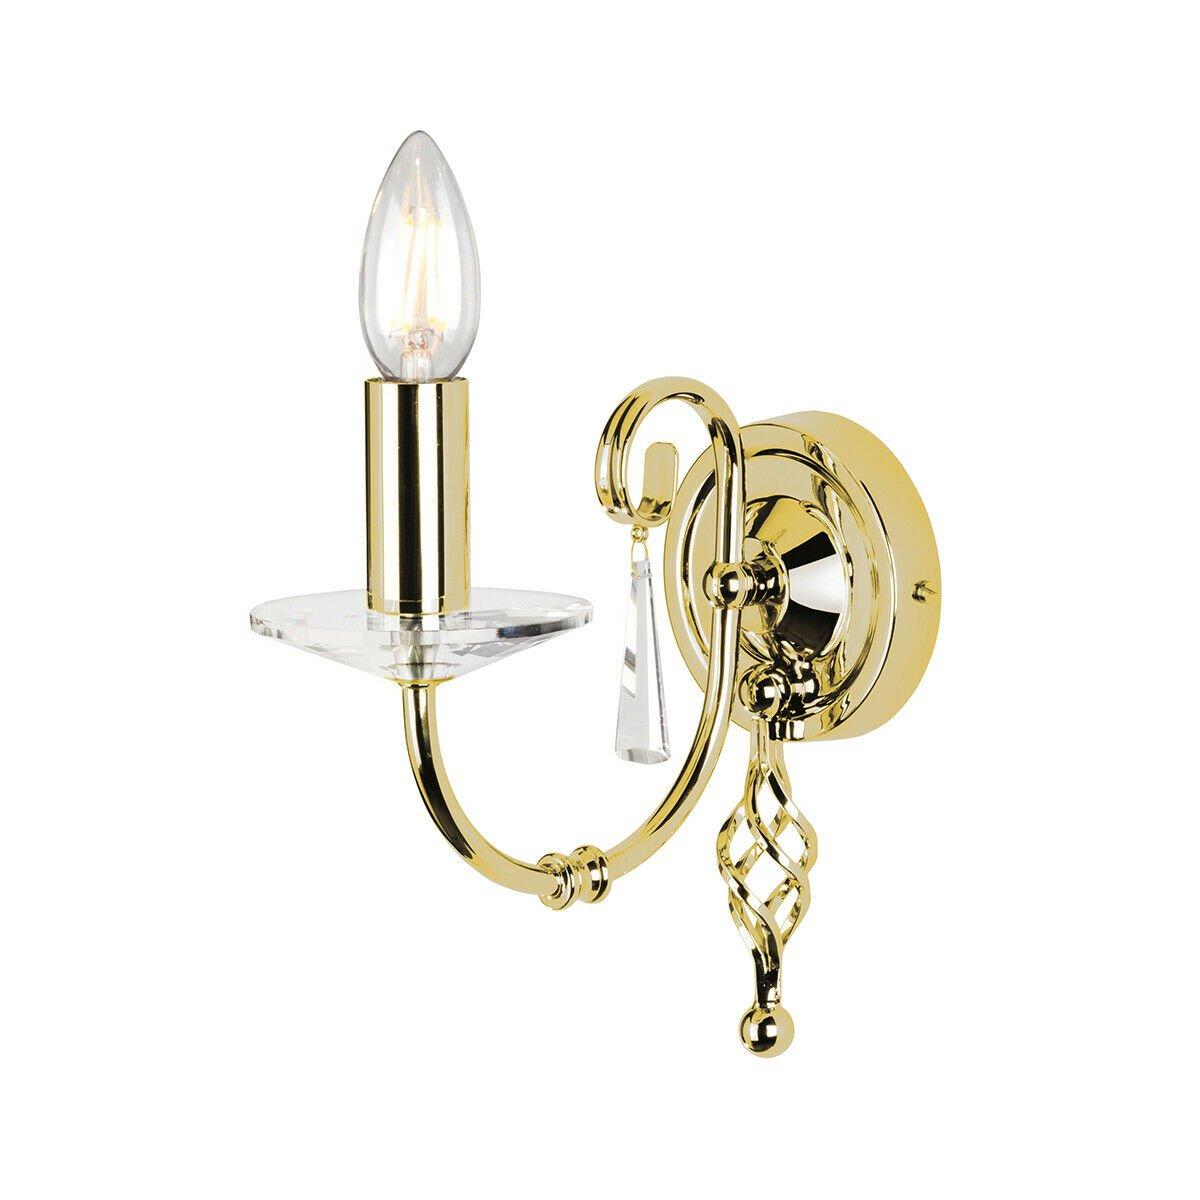 Wall Light Cut Glass Droplets Swirl Finial Polished Brass LED E14 60W